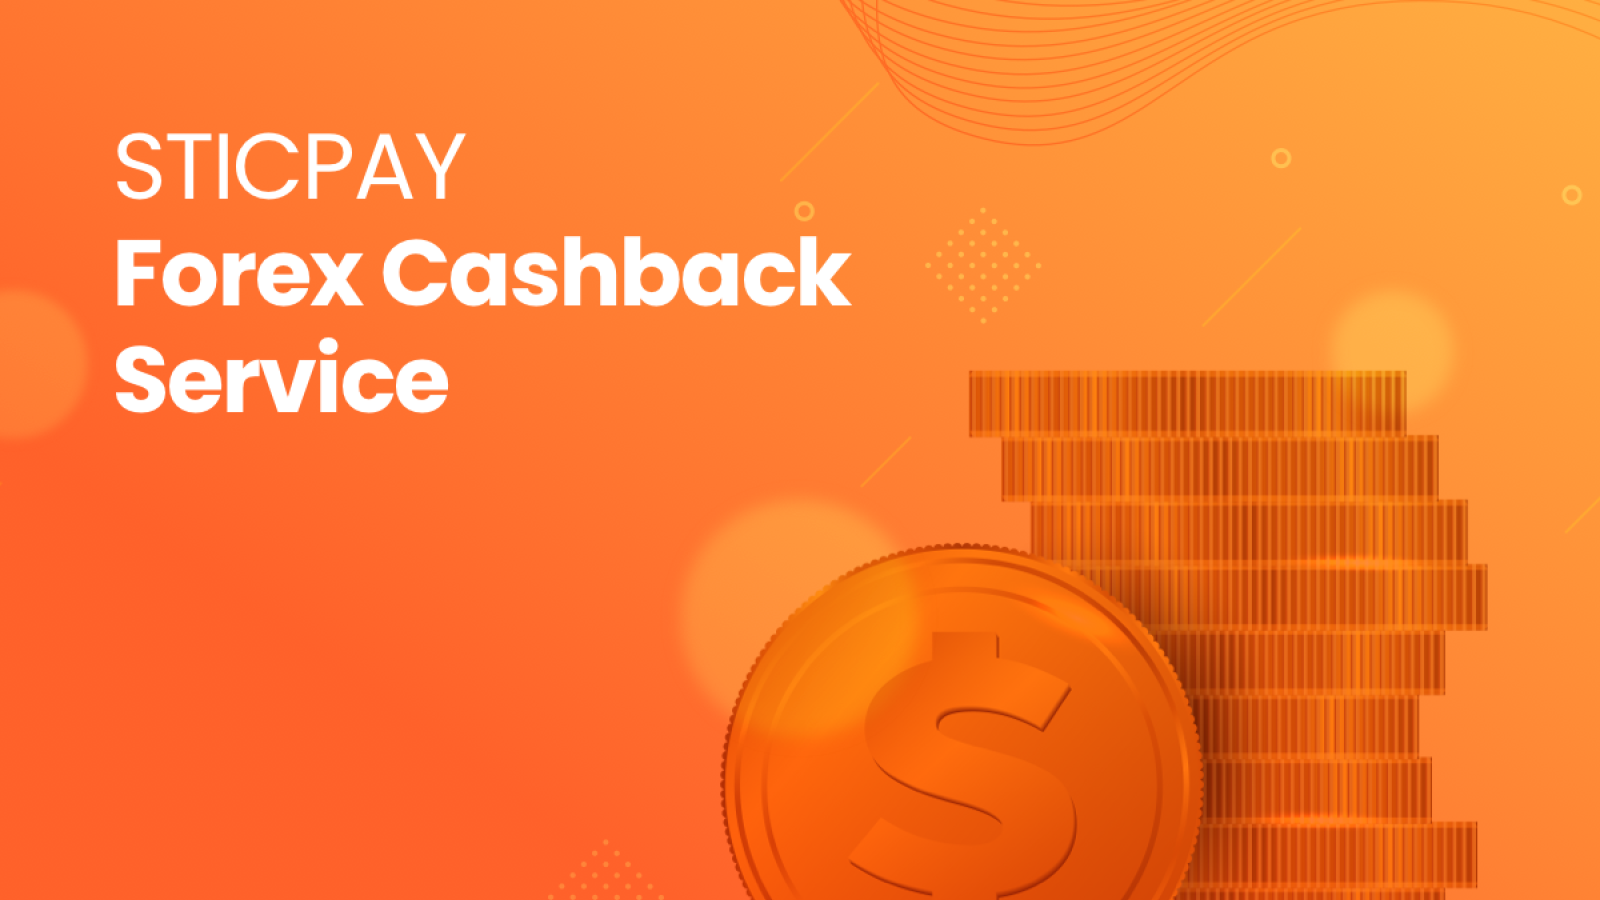 STICPAY Introduces Forex Cashback Program